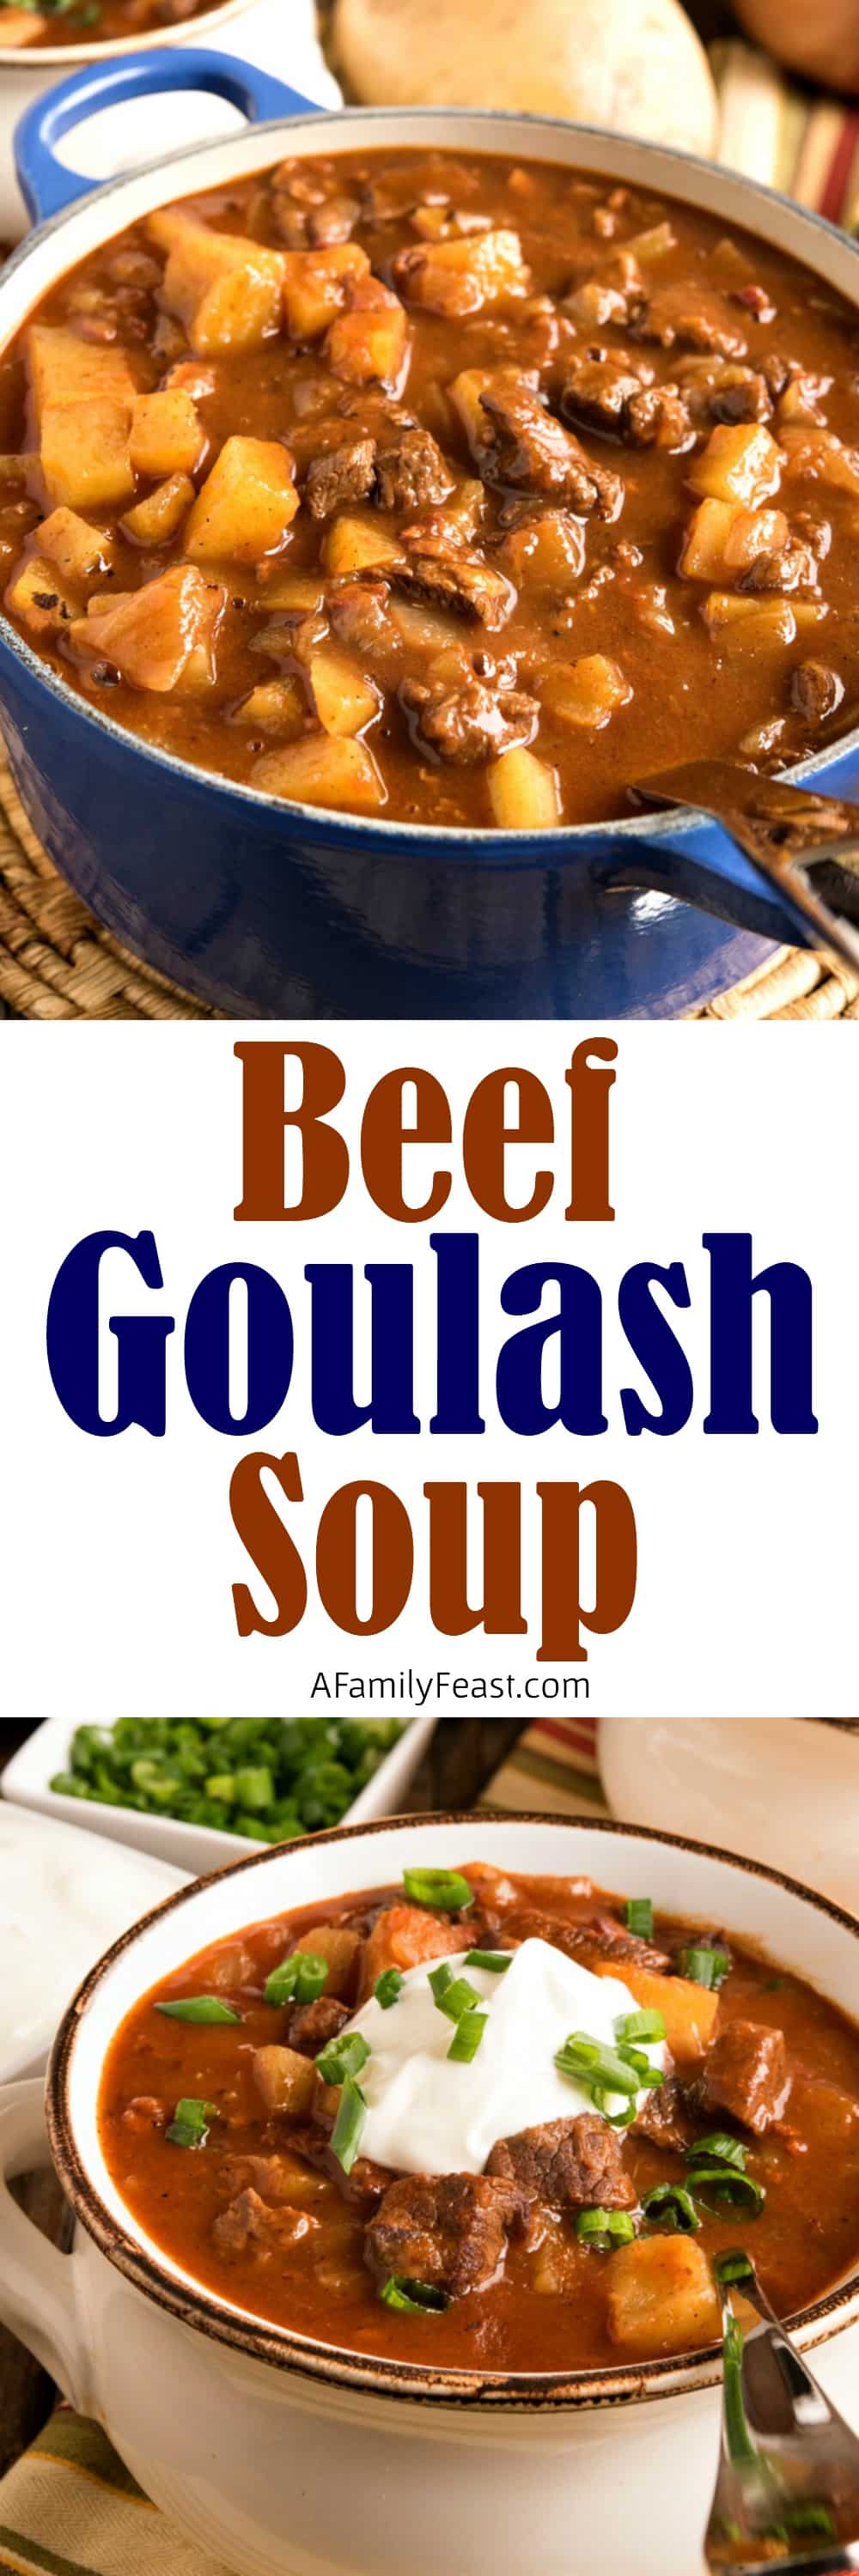 Beef Goulash Soup